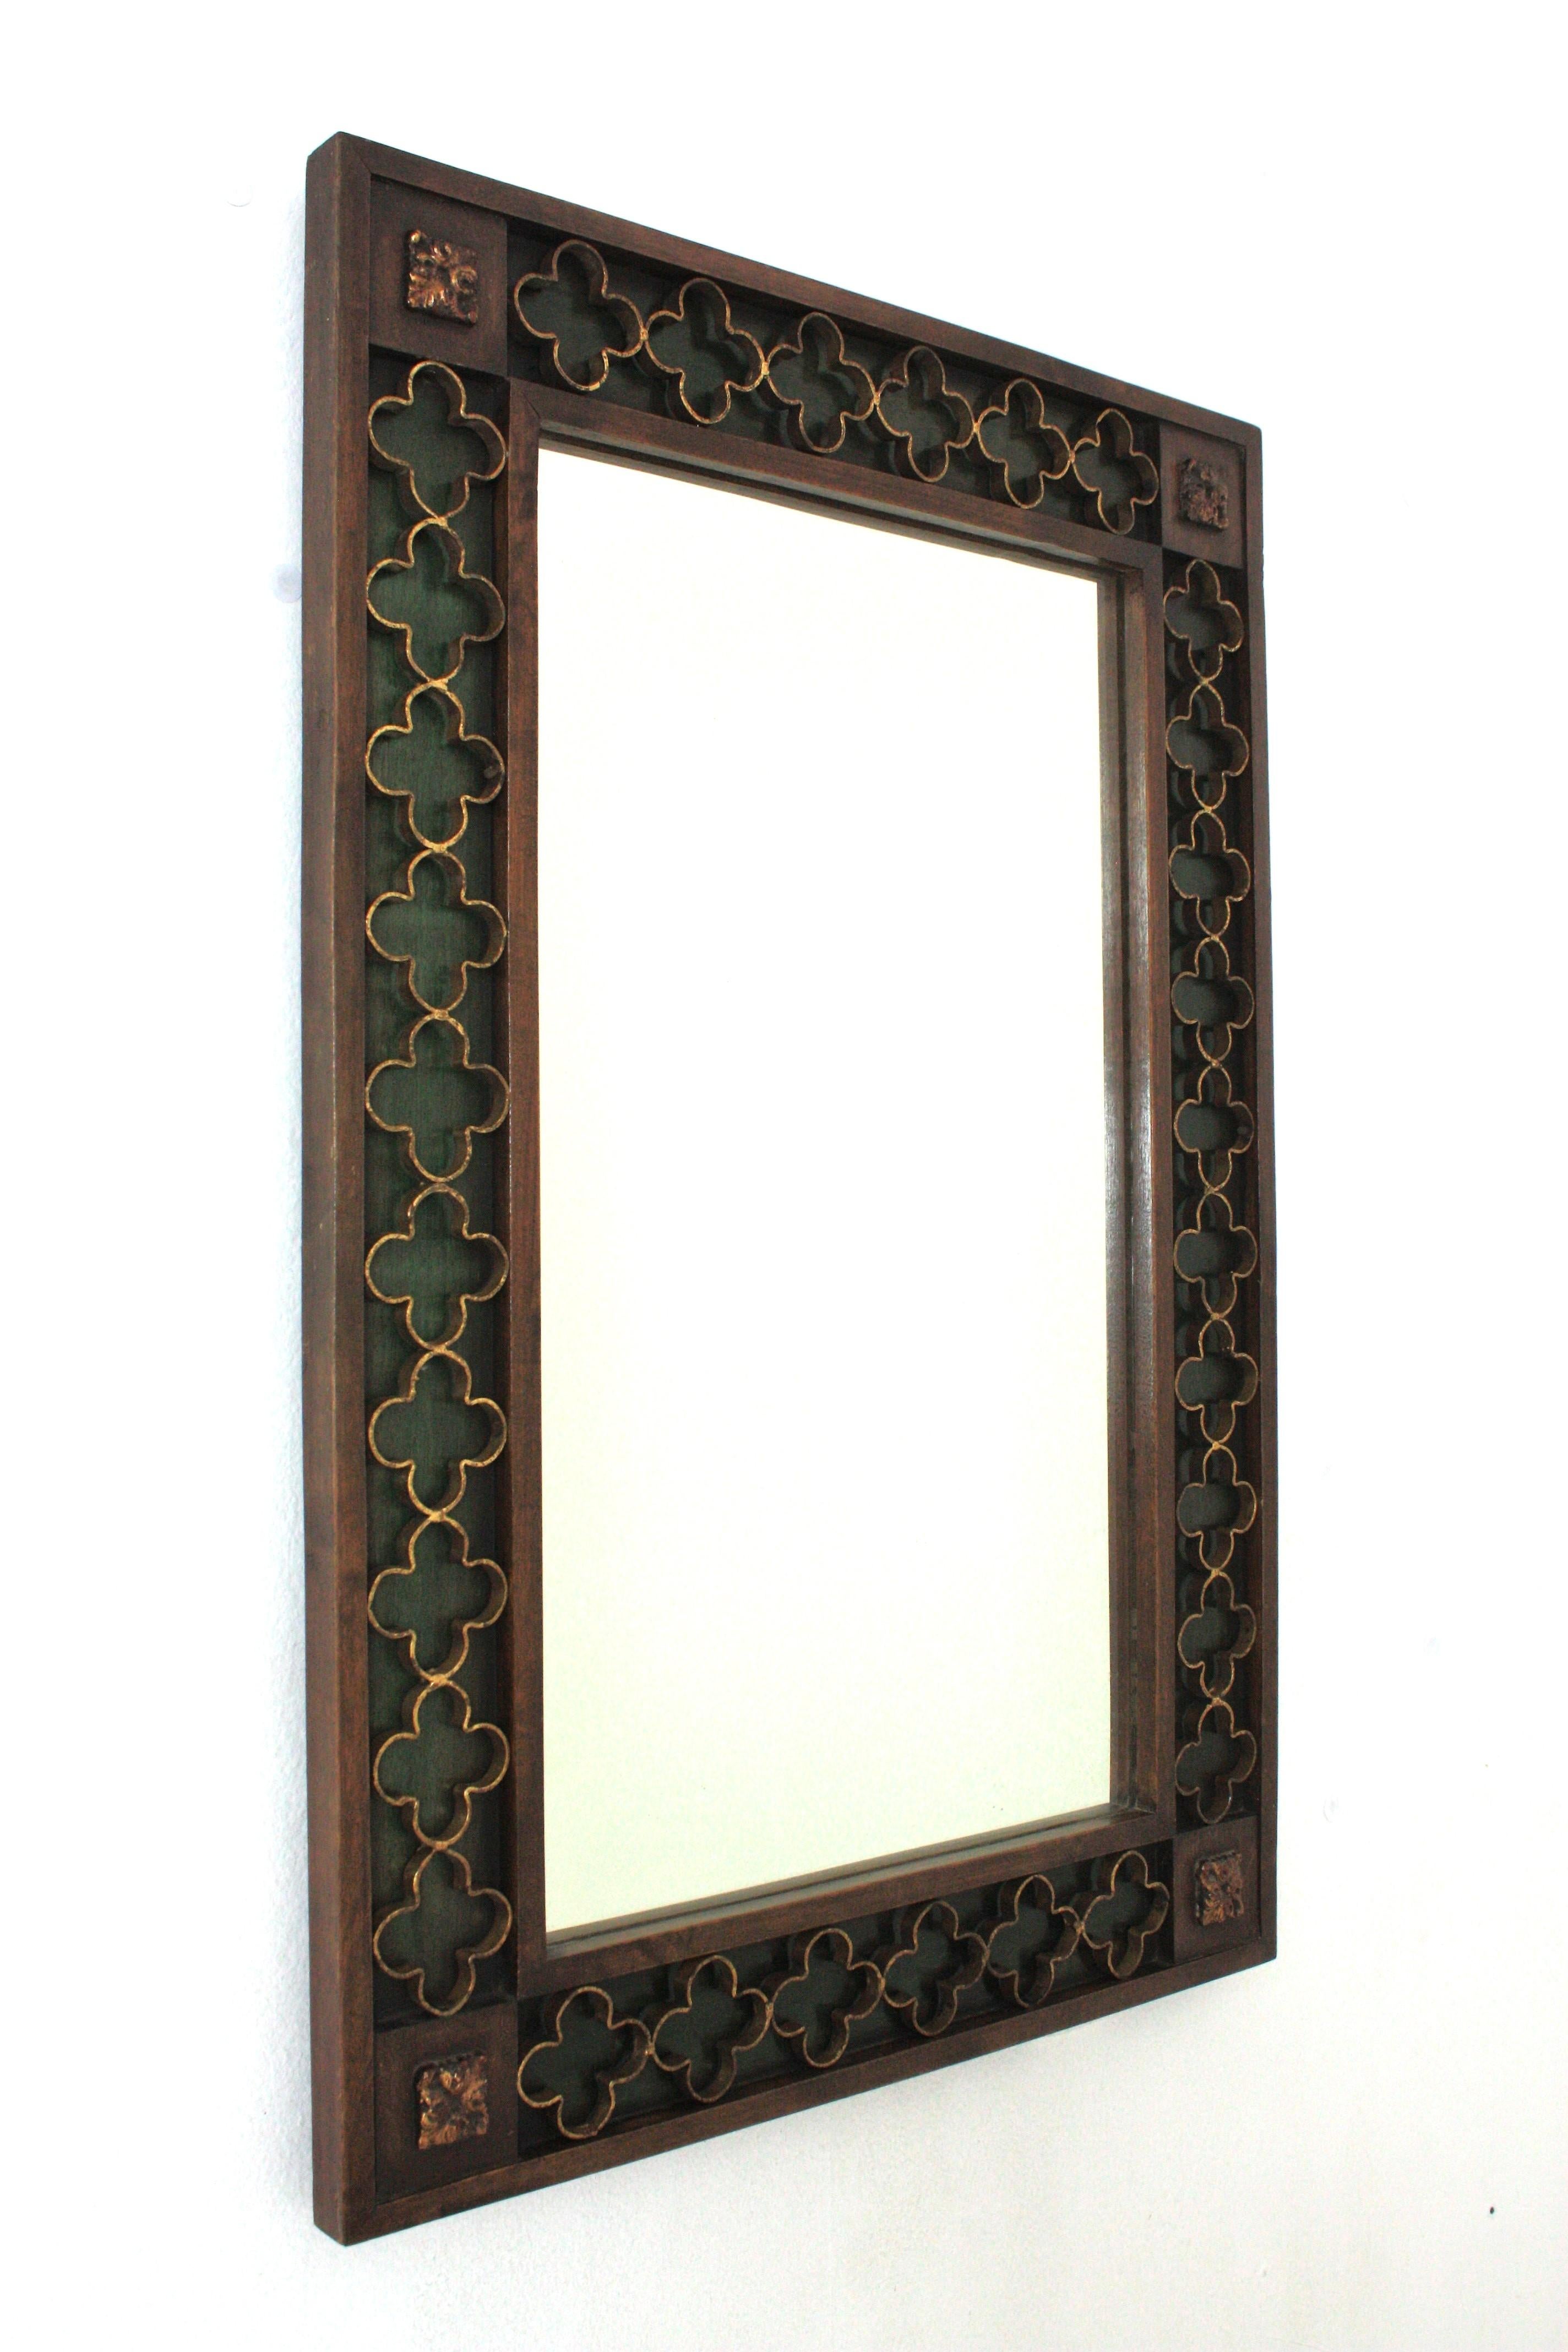 Wrought Iron Spanish Revival Rectangular Mirror with Gilt Iron Rosettes Frame